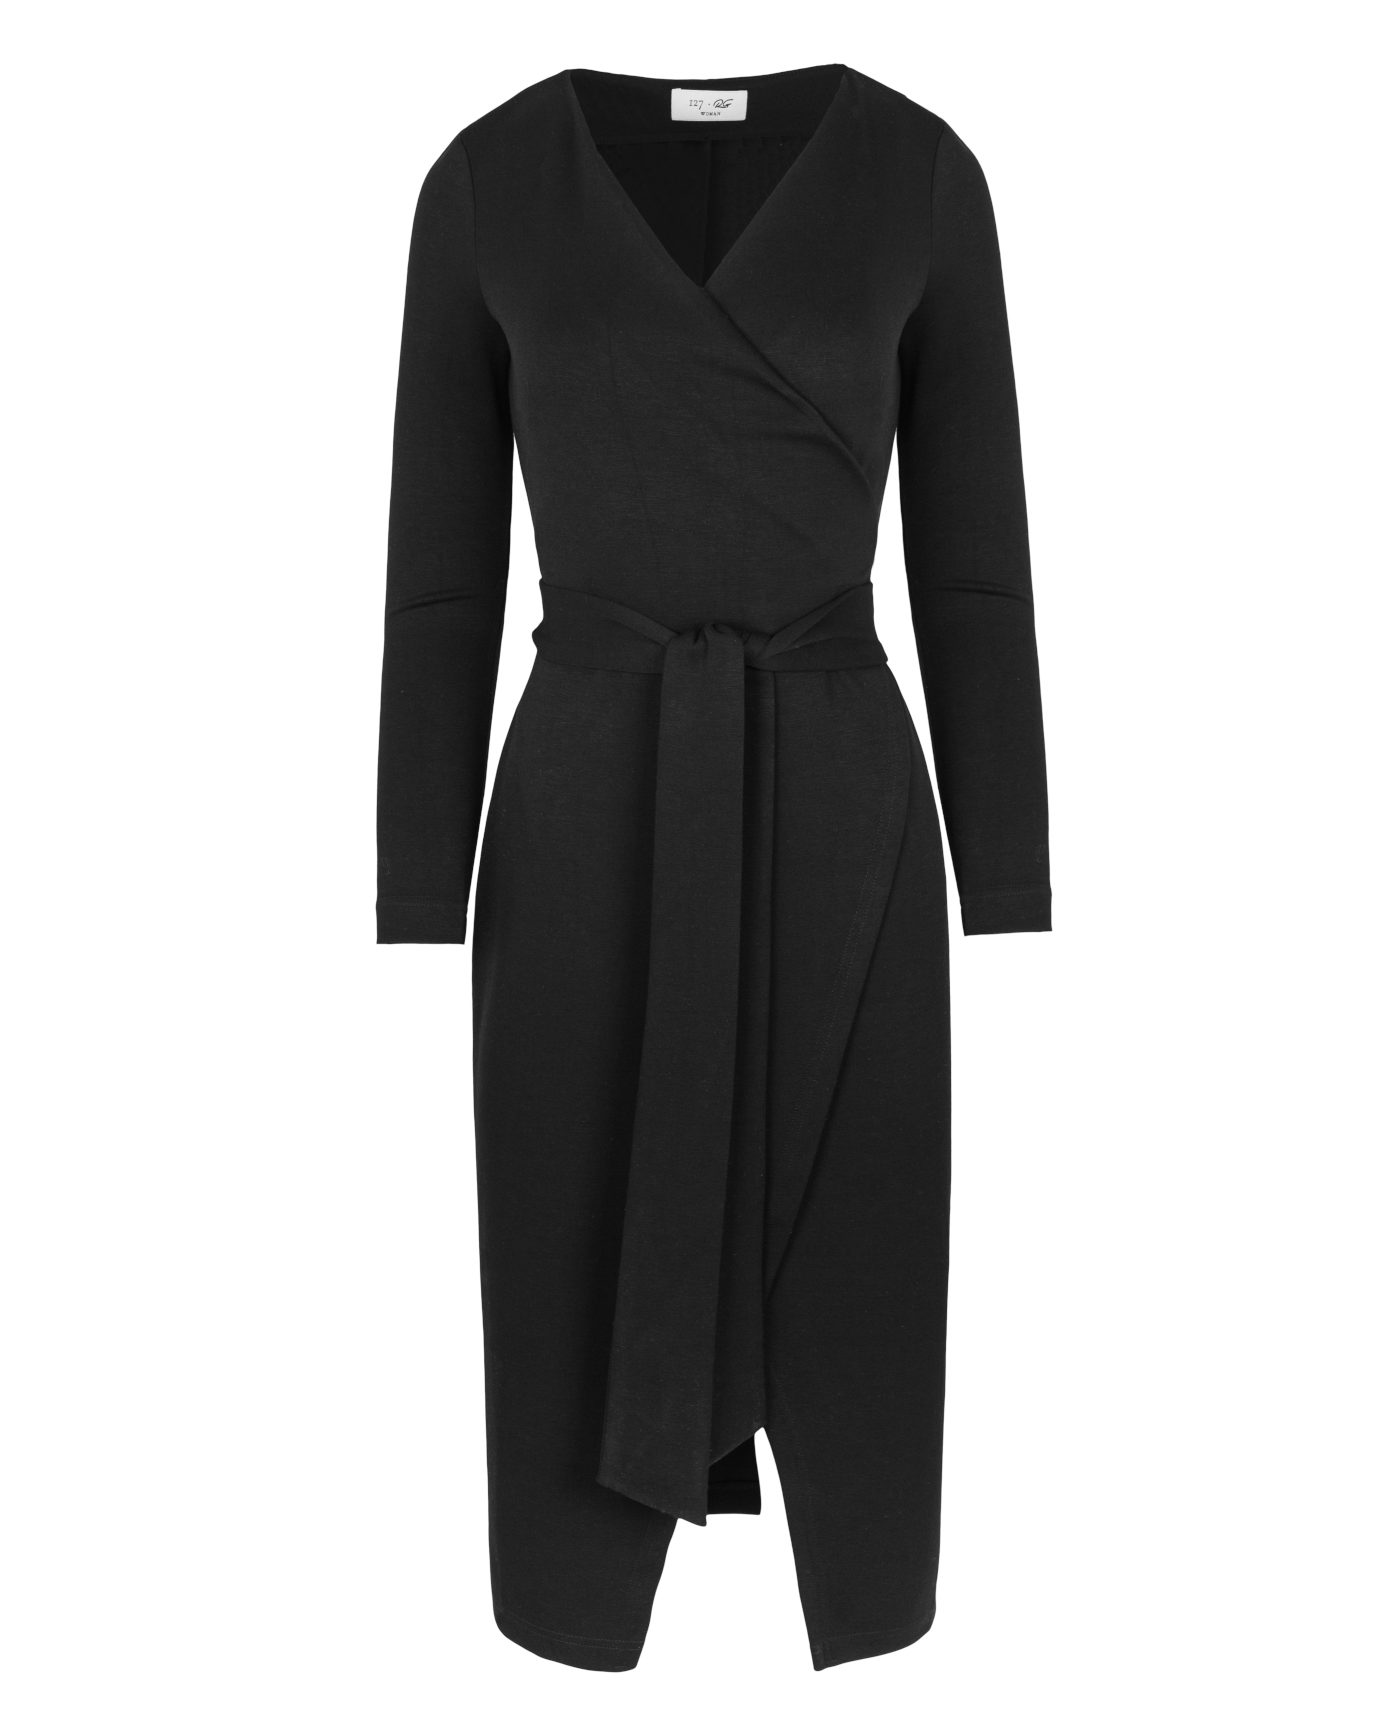 127RG | Stella cotton black wrap dress with binding